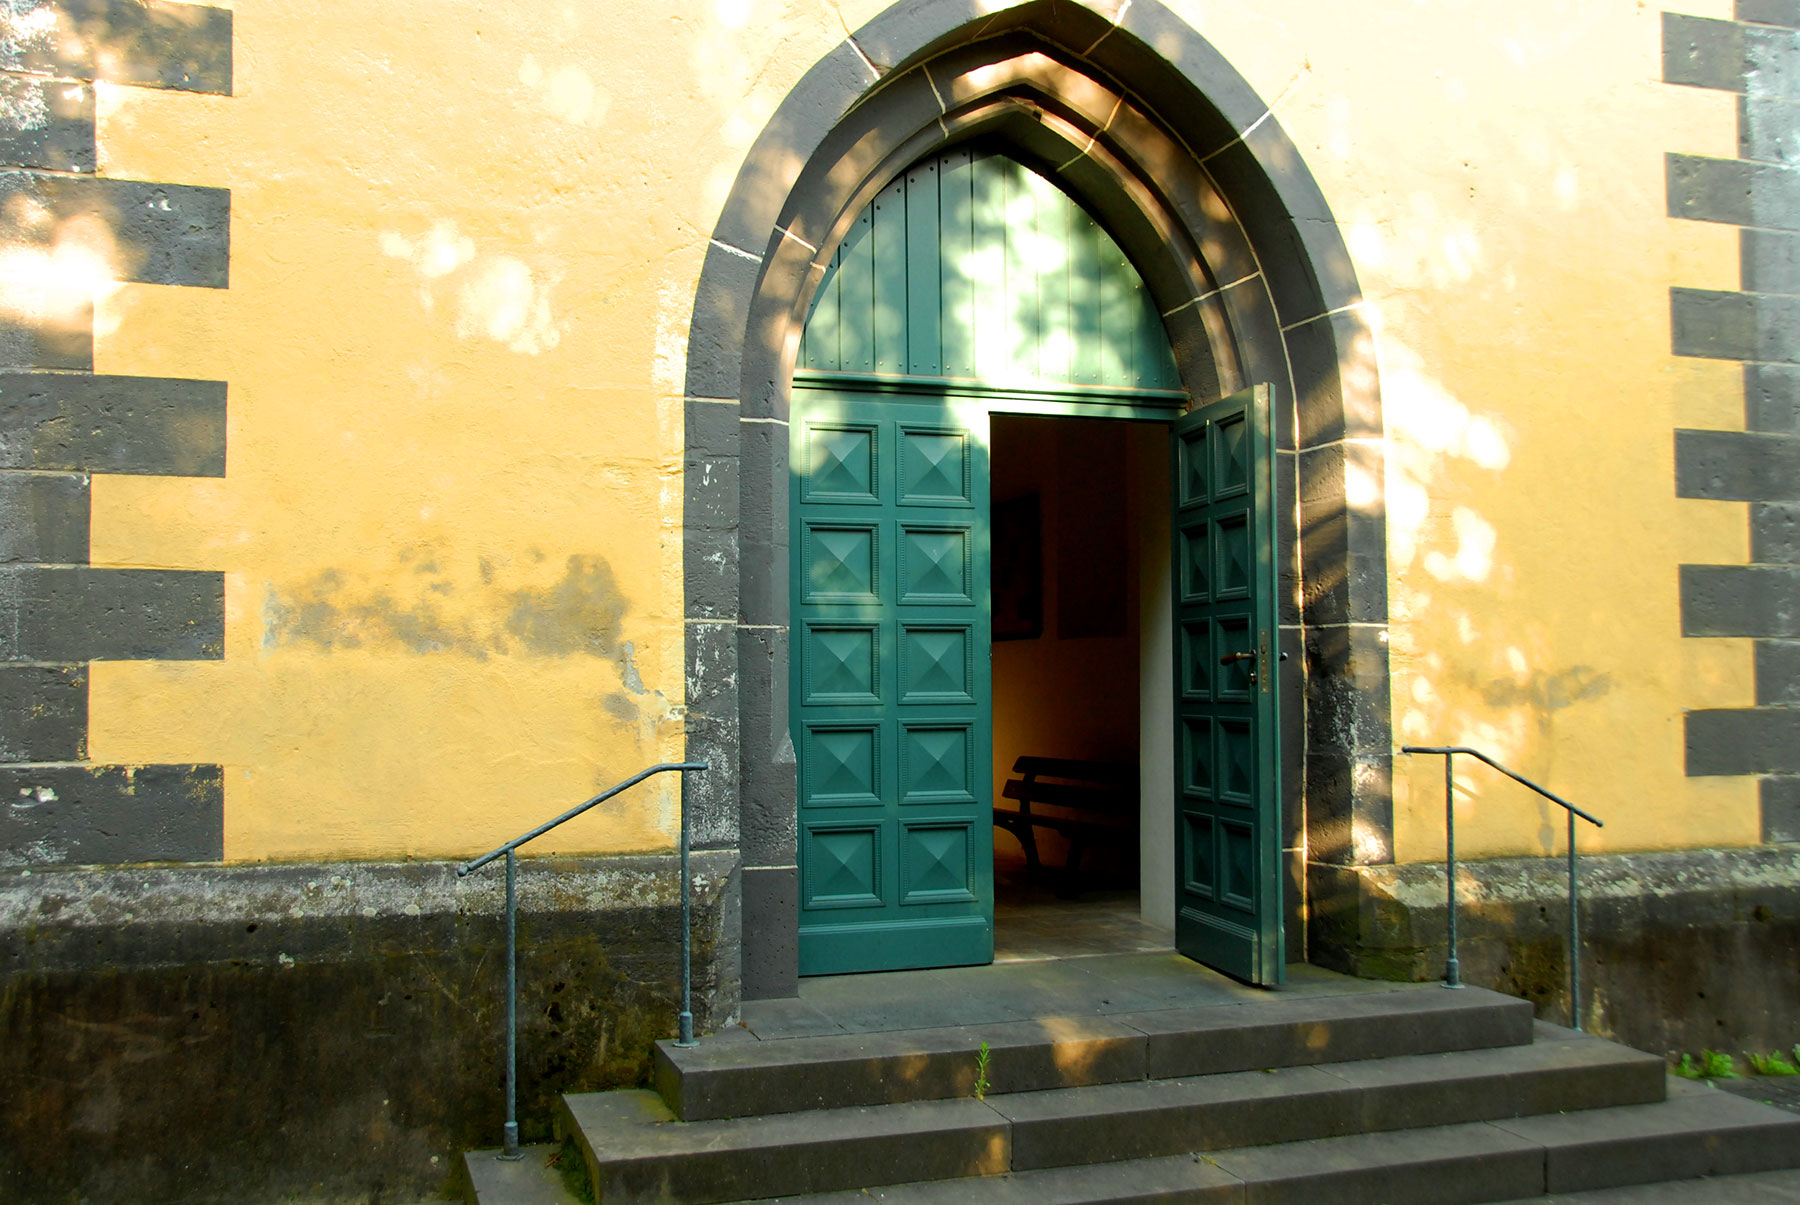 Portal Pfarrkirche St. Marzellinus und Petrus, Vallendar (Foto: Brehm)